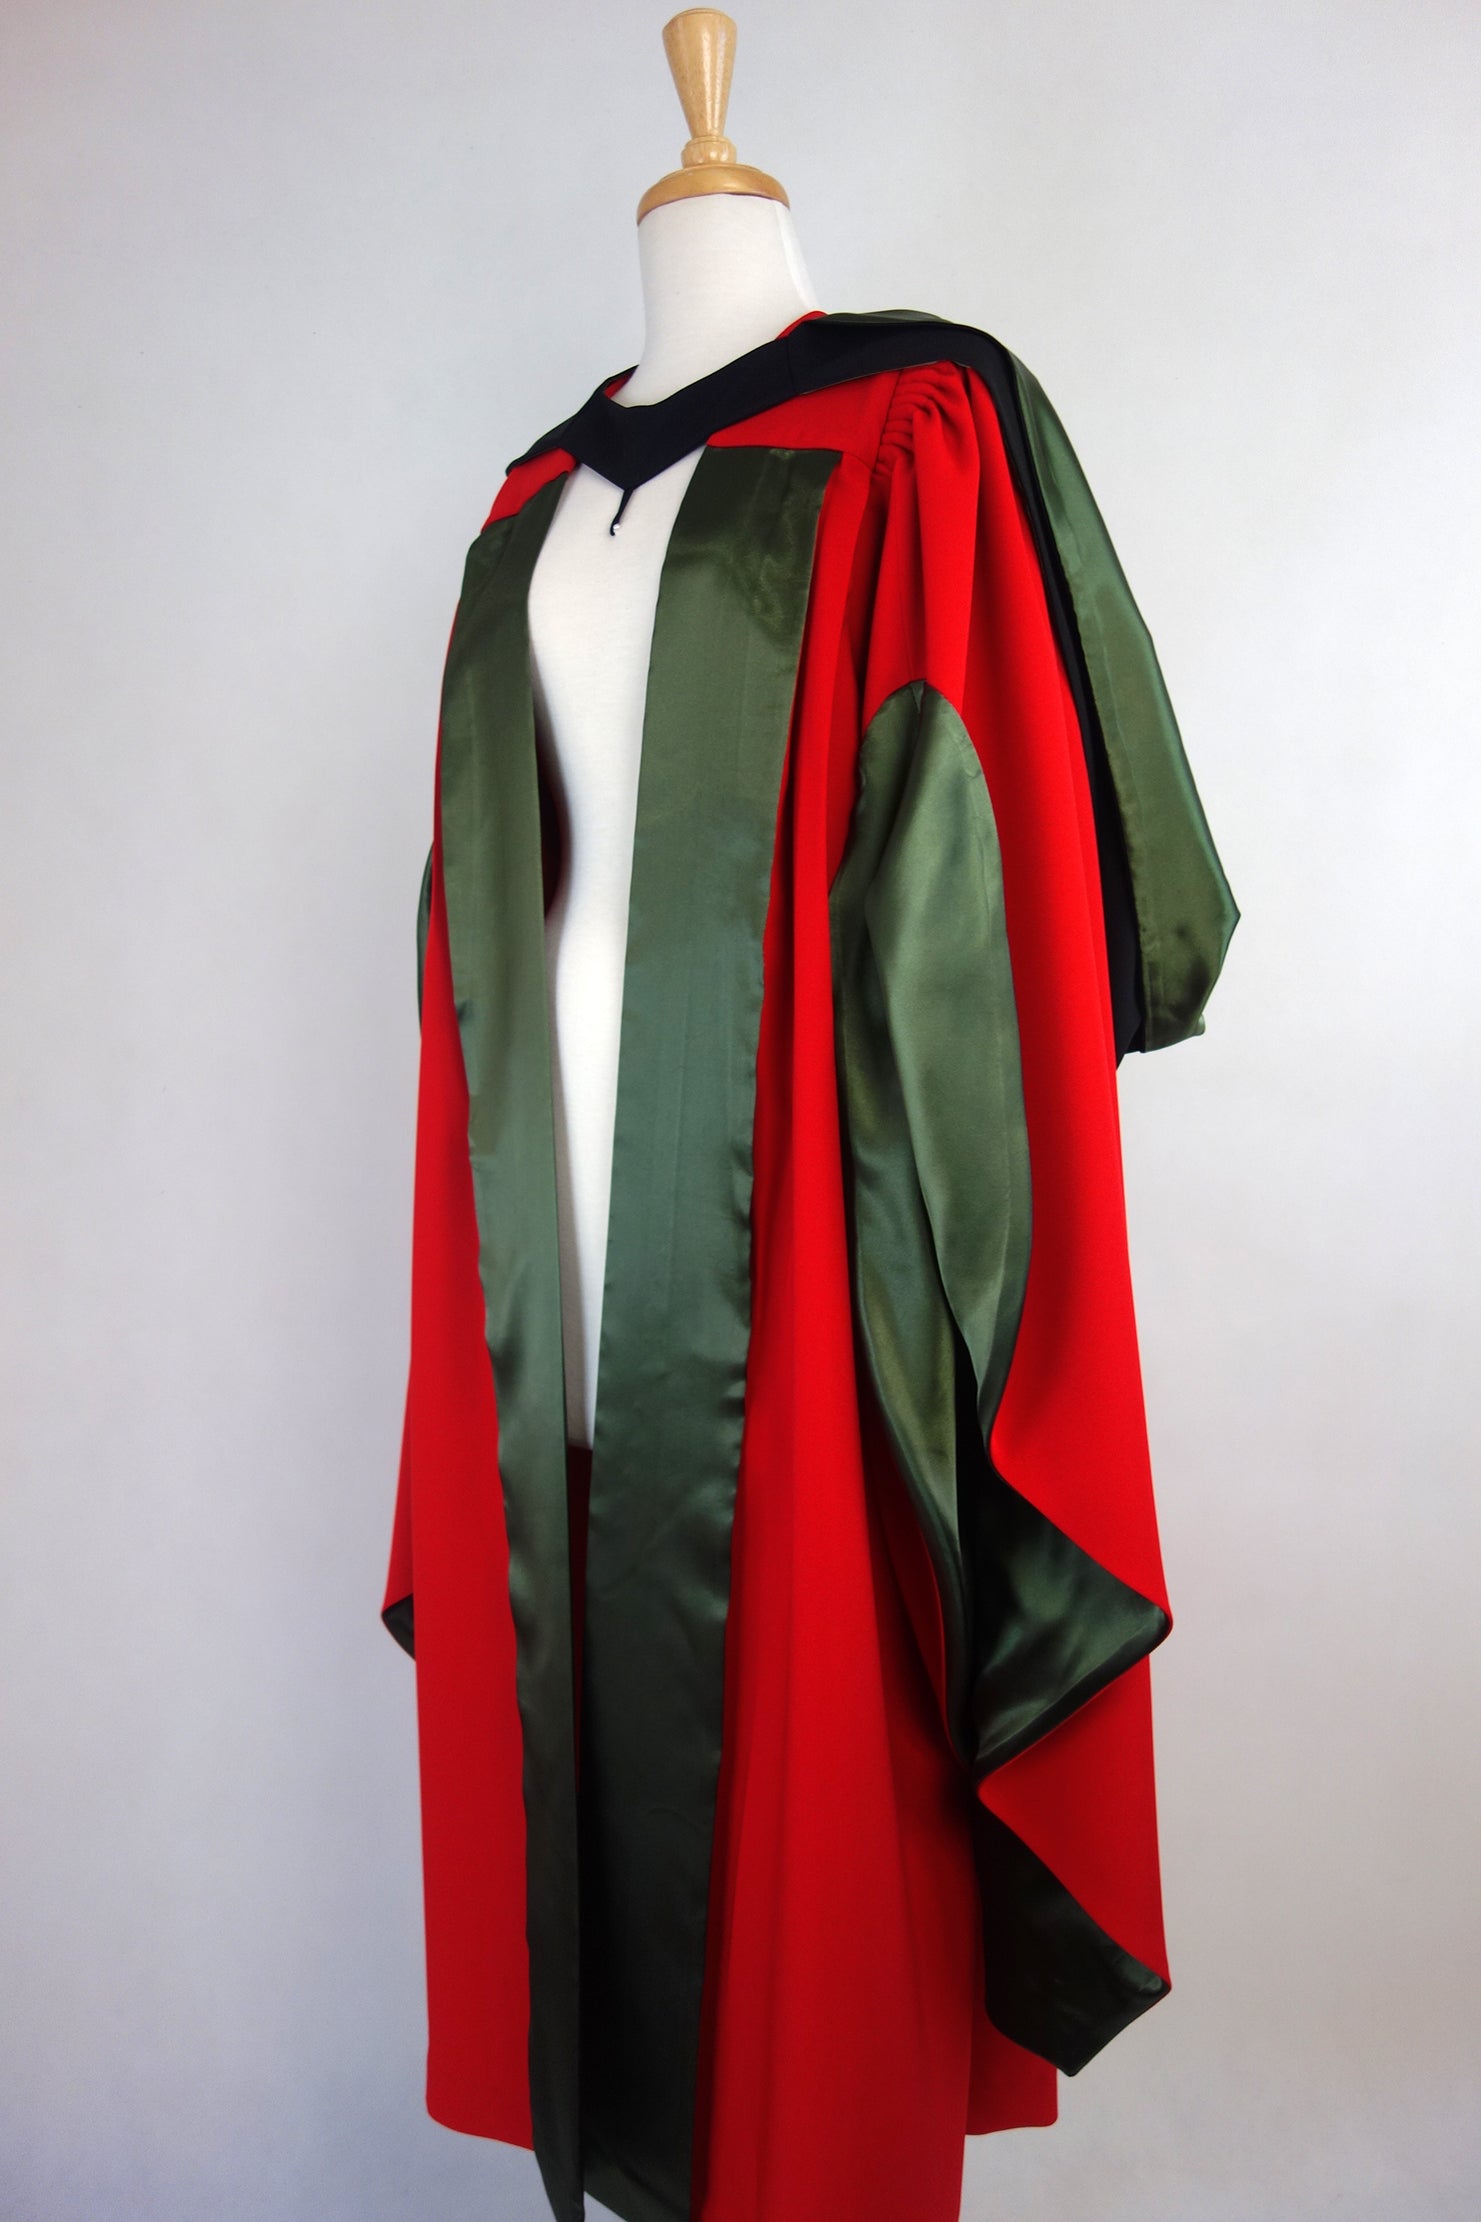 Graduation 2019 - The Gown | RMIT University - YouTube